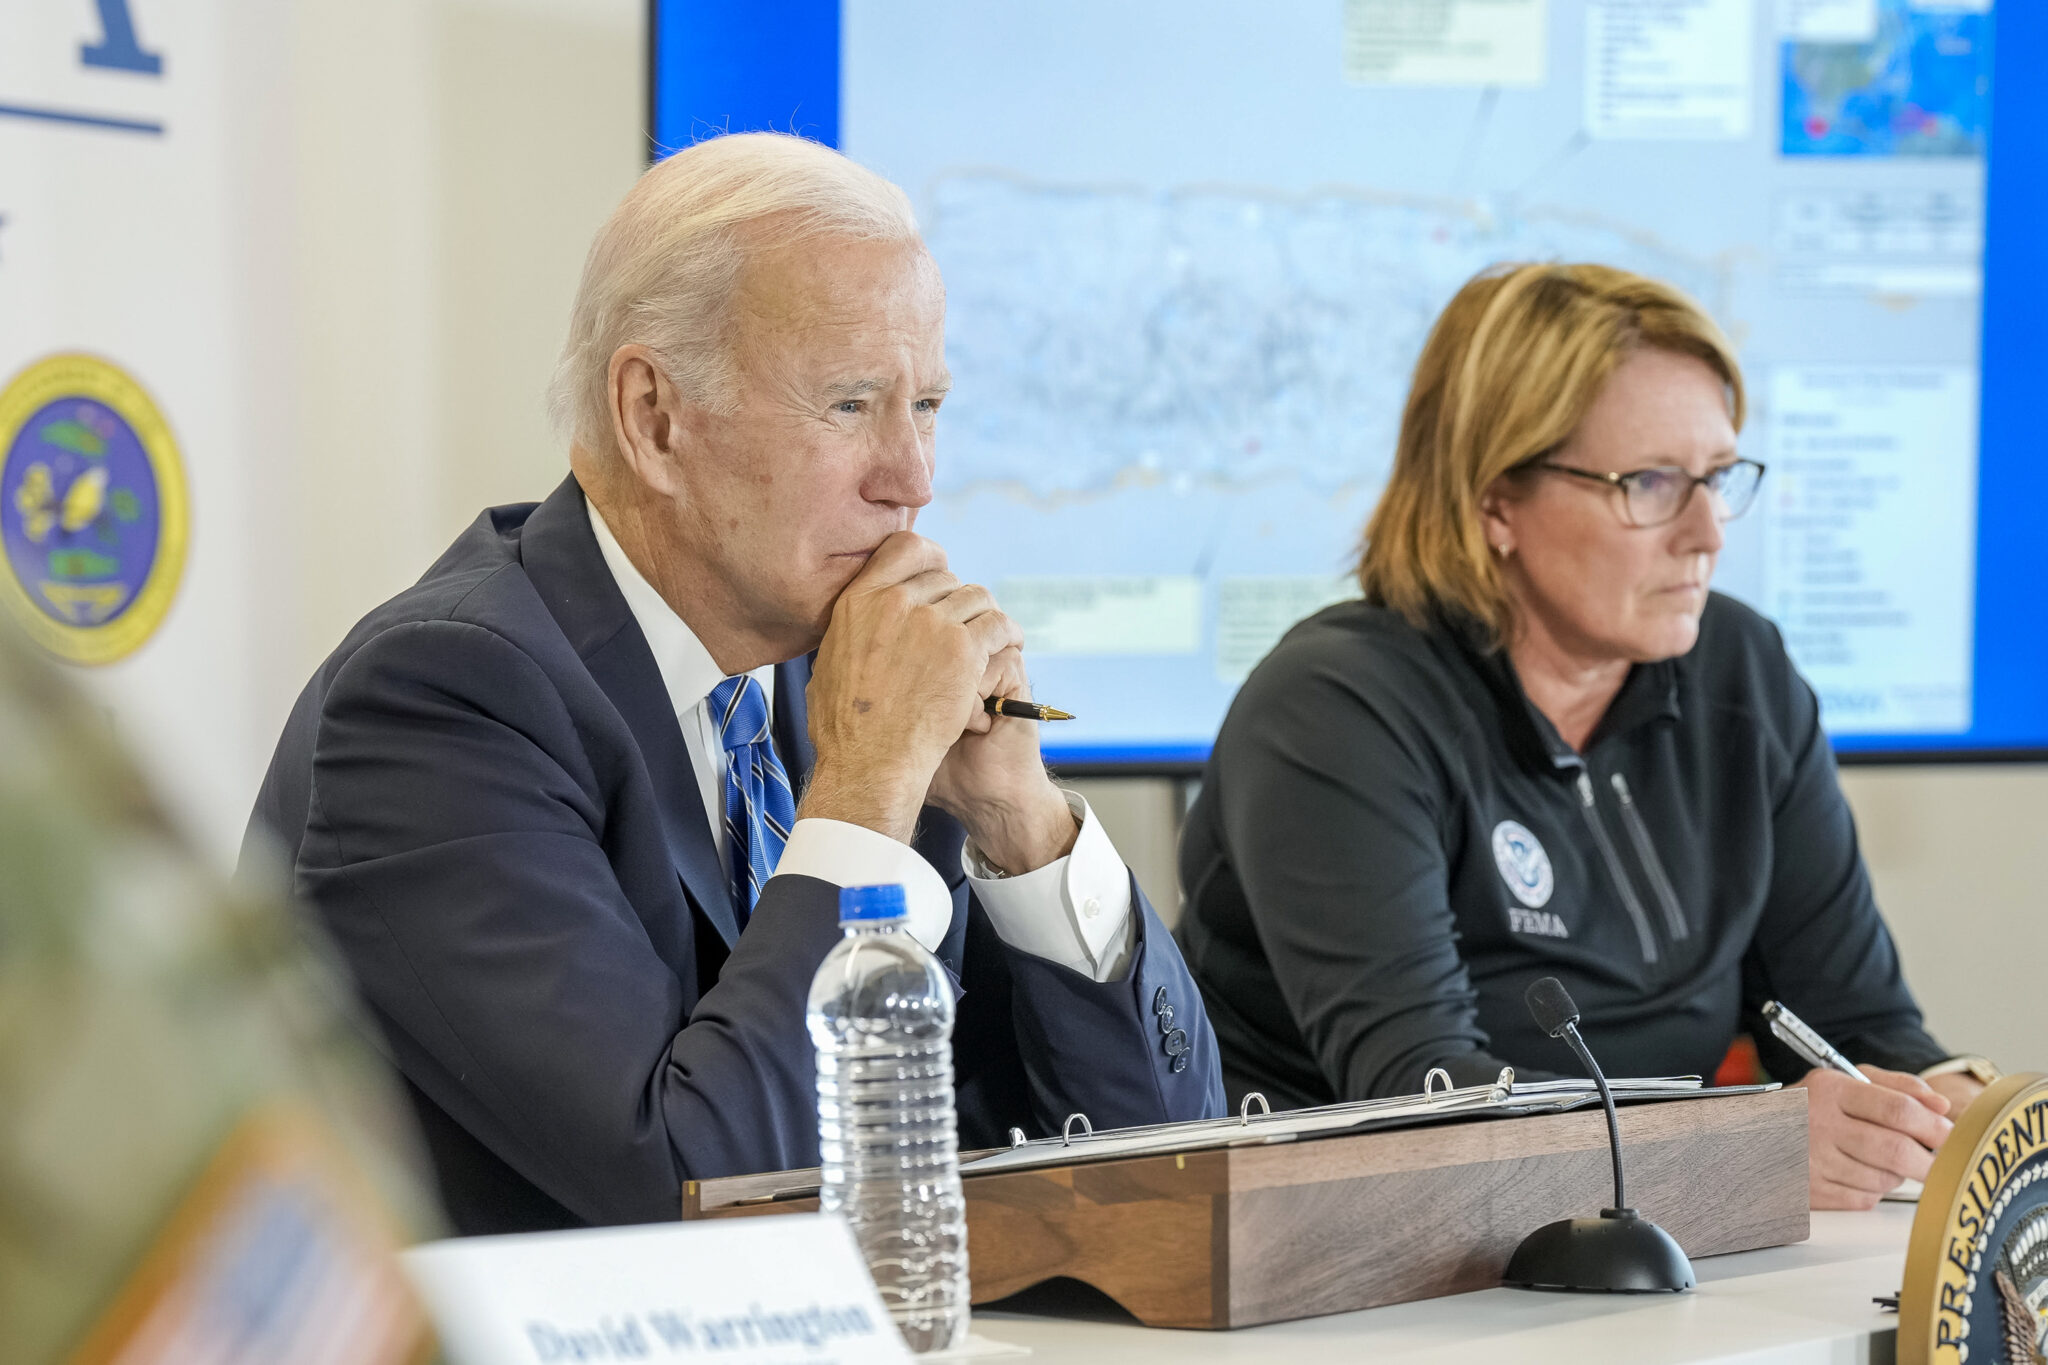 How Biden is responding to Hurricane Fiona